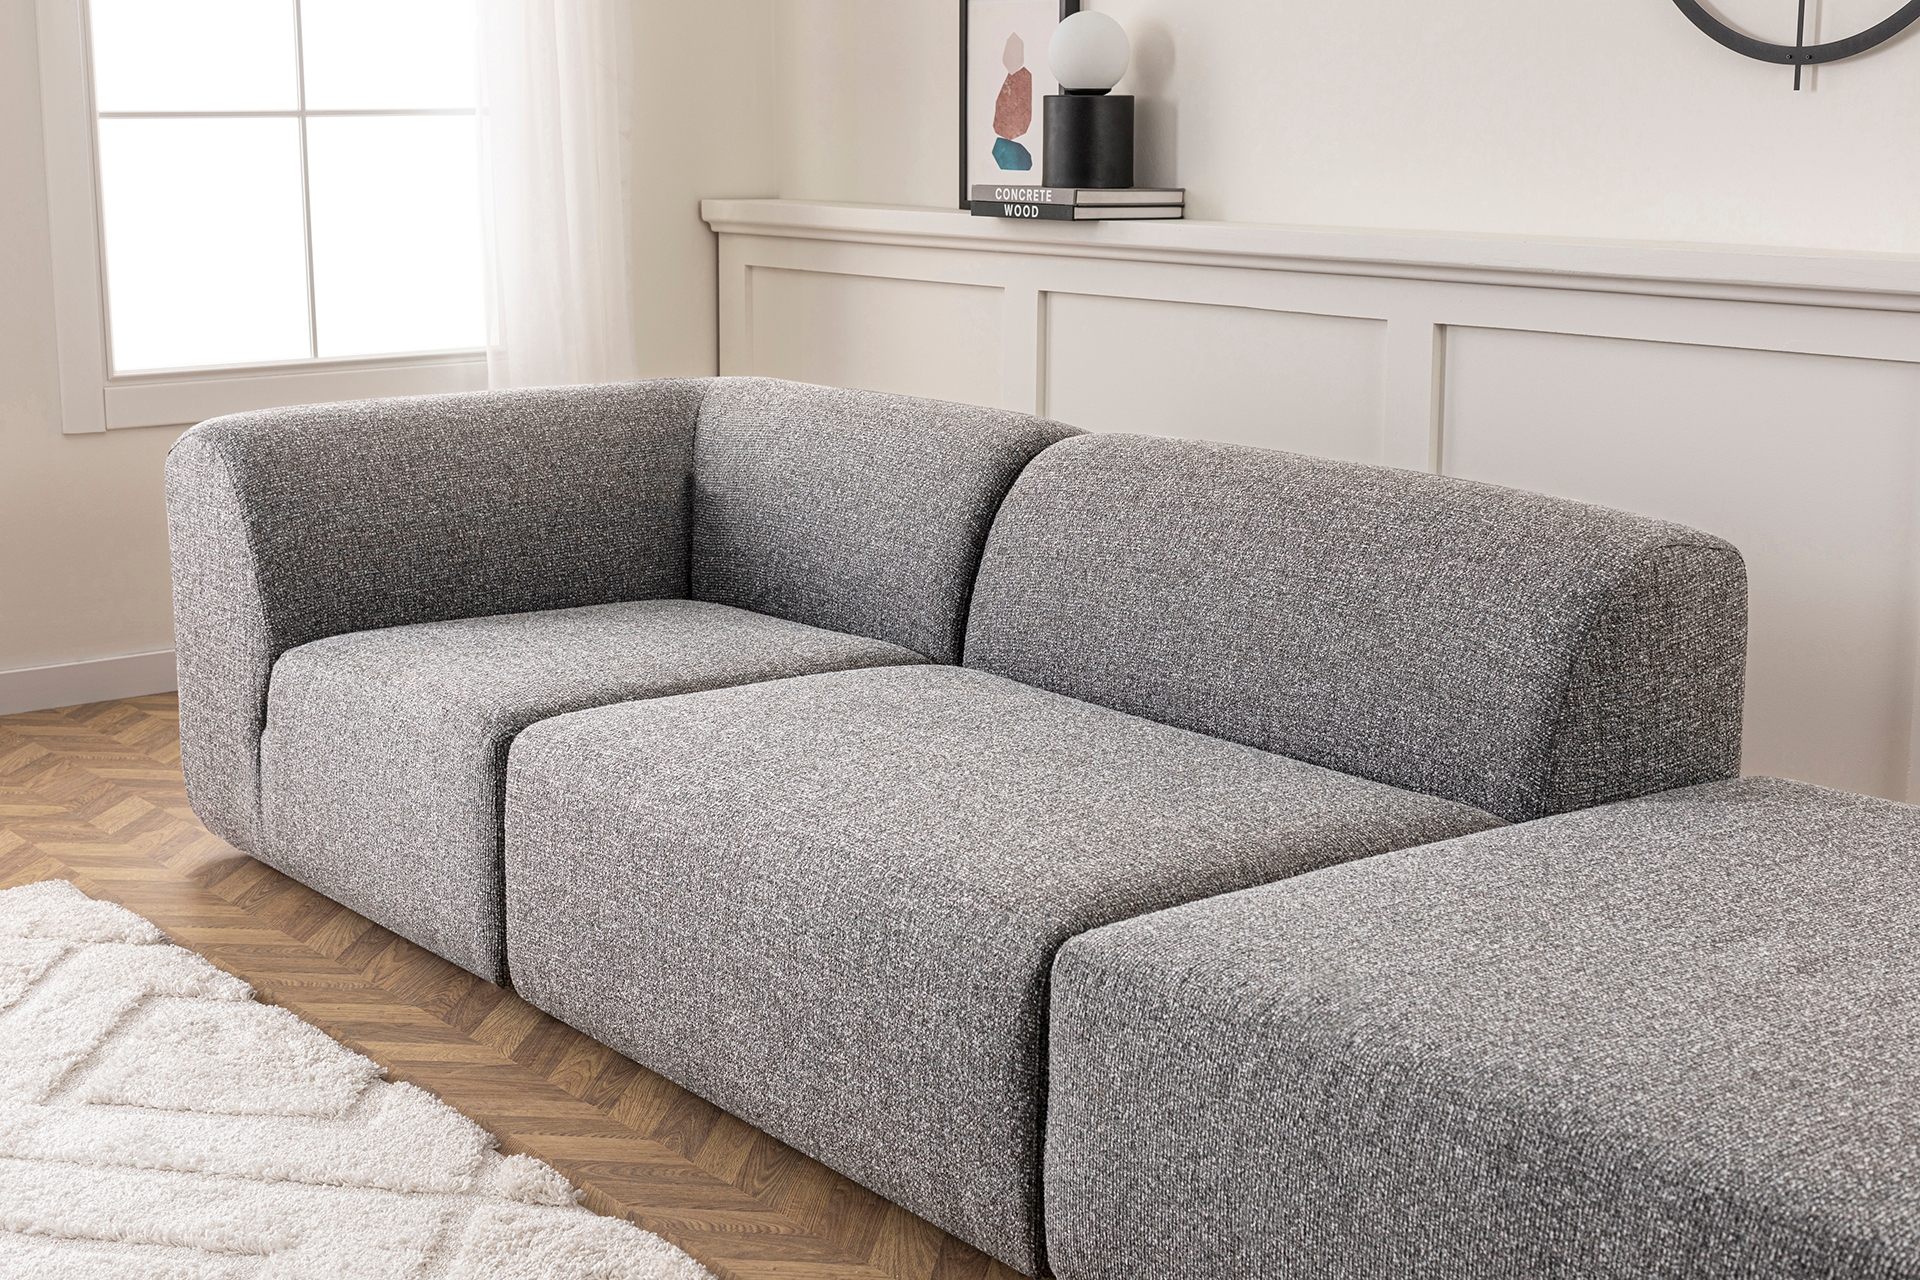 modular sofa beds melbourne